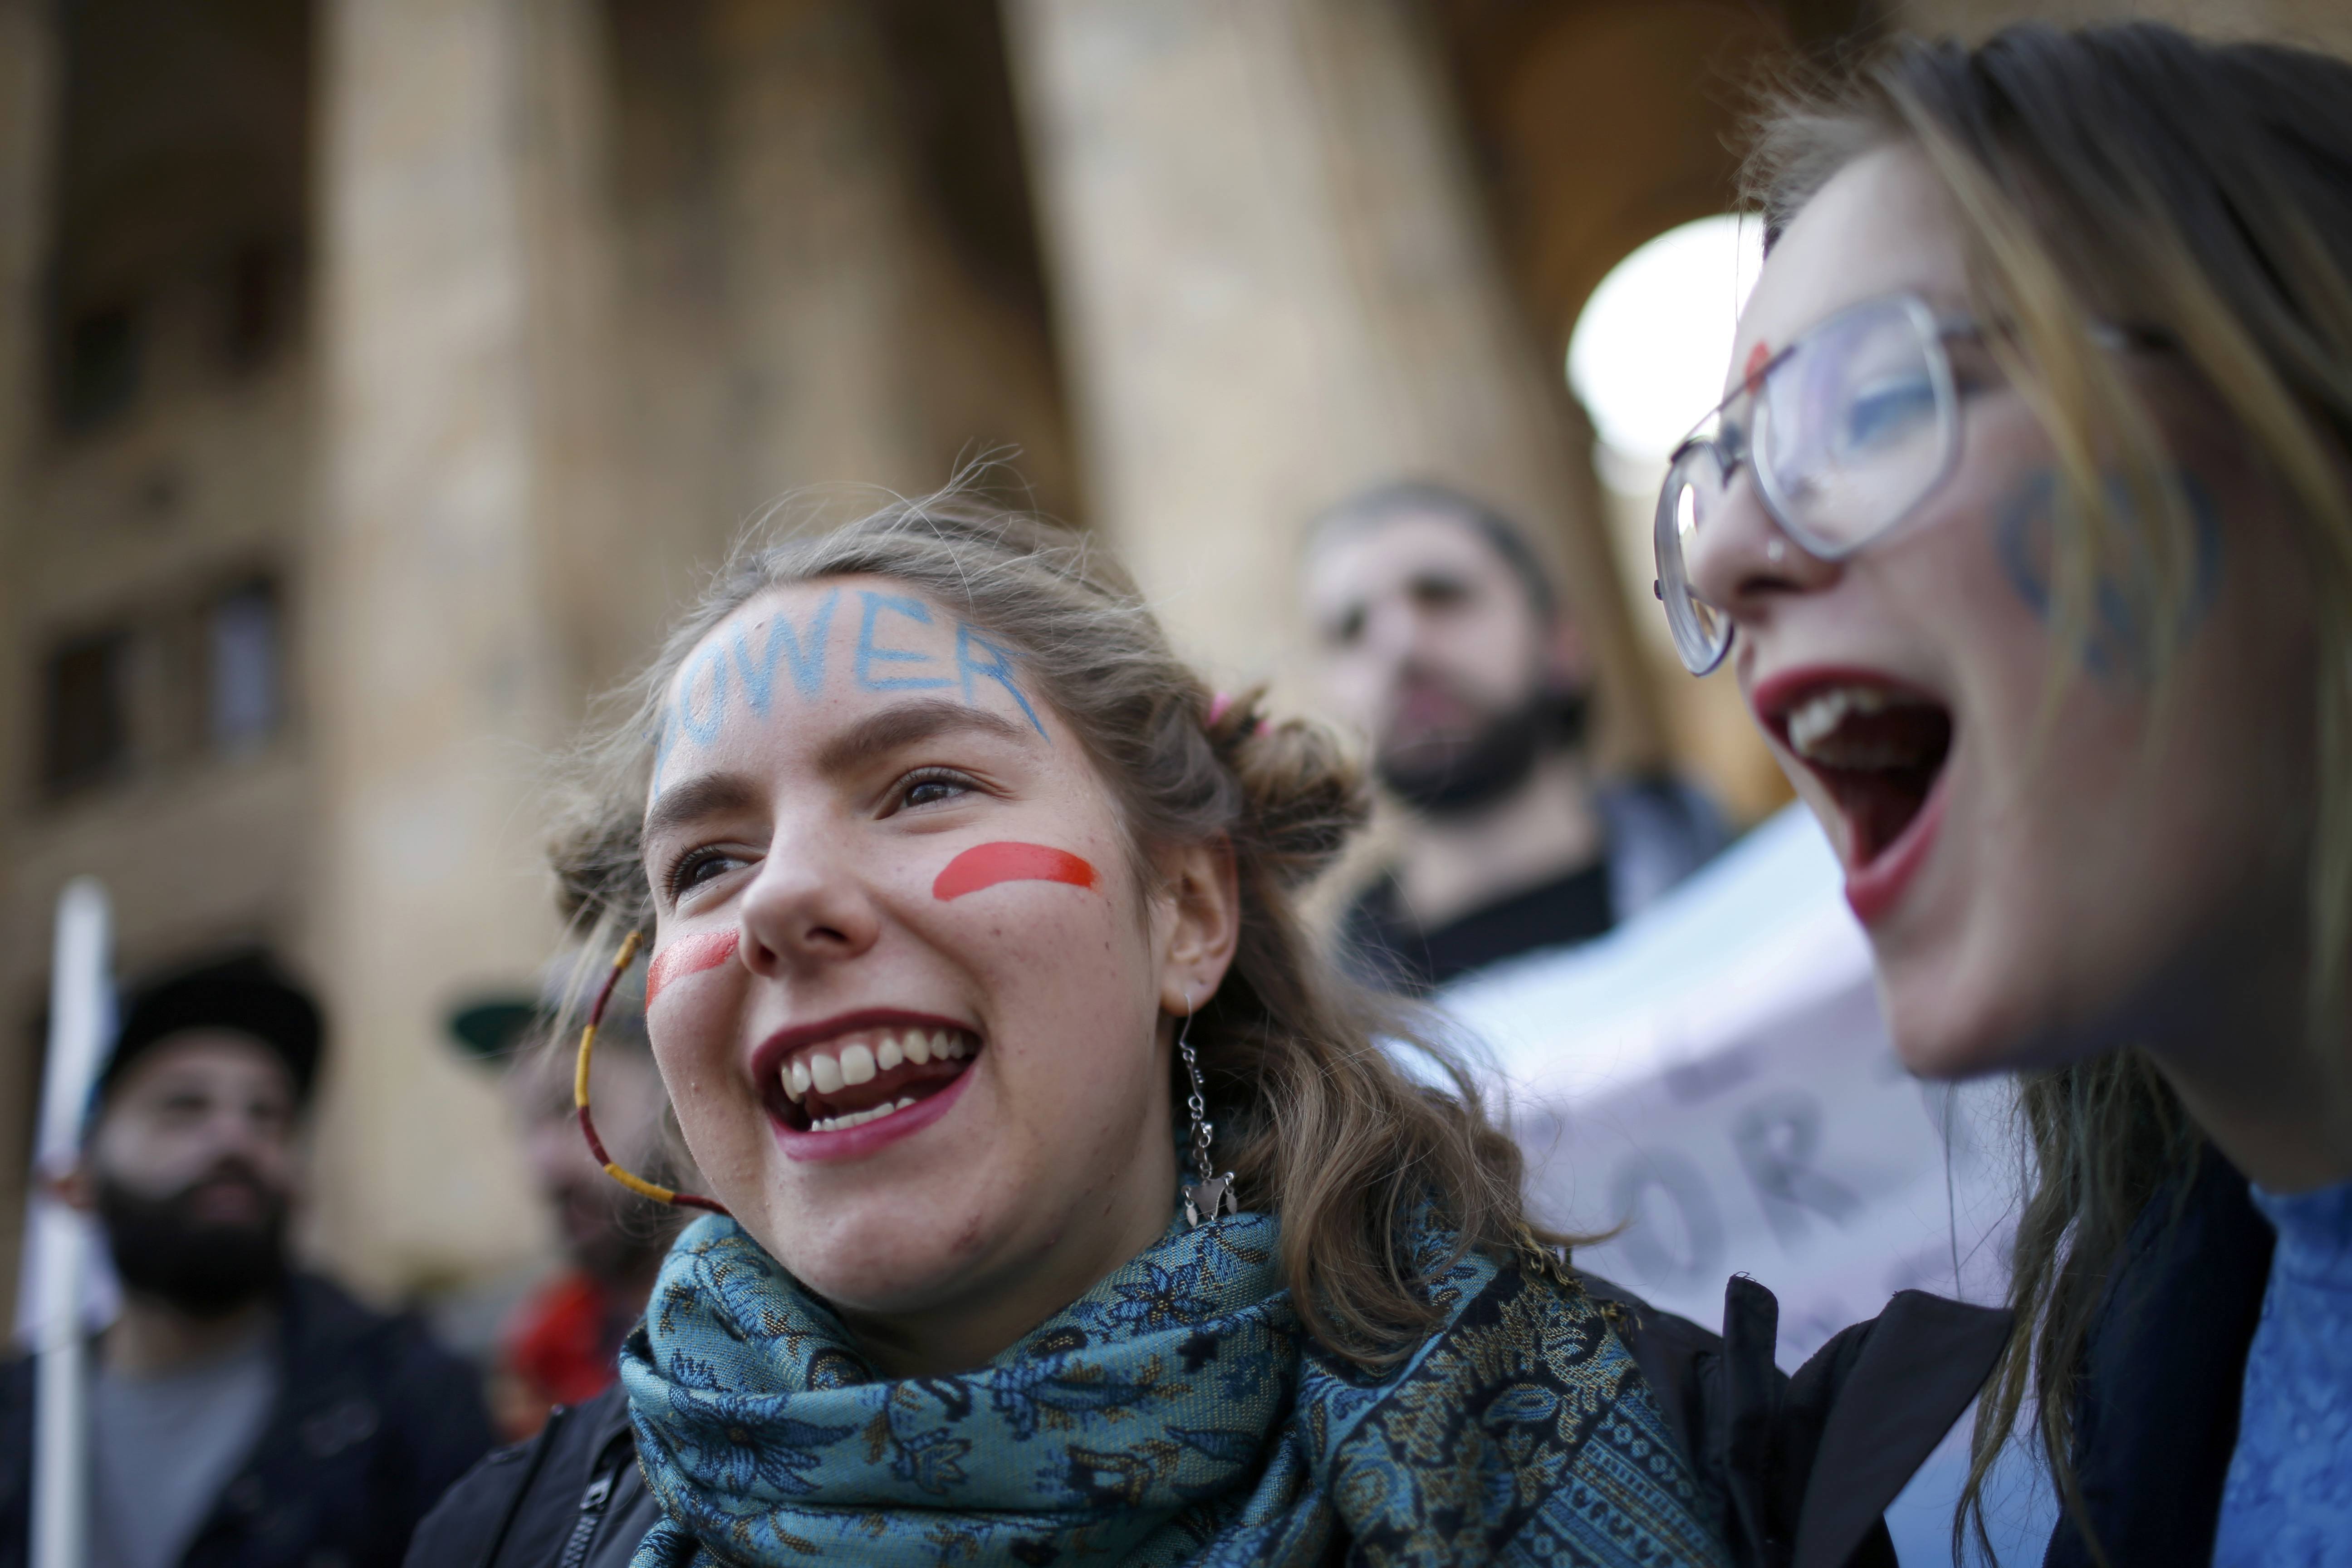 People attend a rally to mark International Women's Day in Tbilisi, Georgia March 8, 2017. REUTERS/David Mdzinarishvili